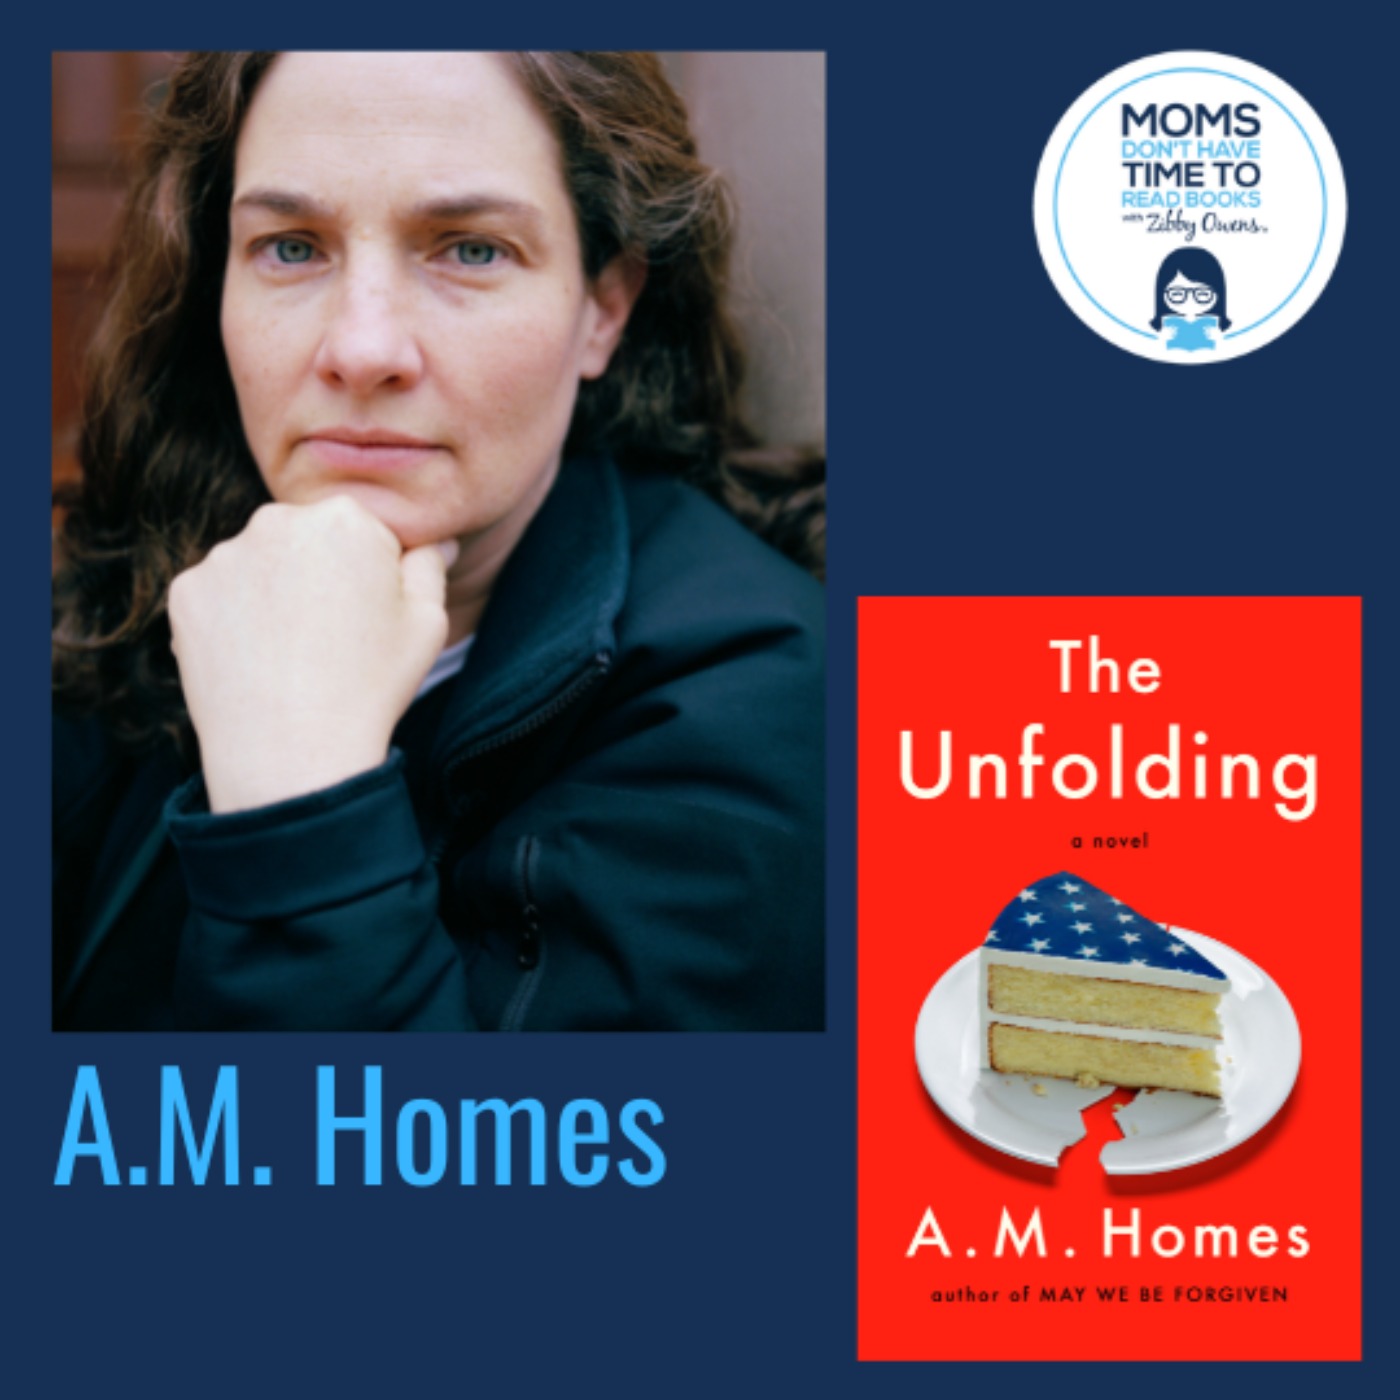 A.M. Homes, THE UNFOLDING: A Novel